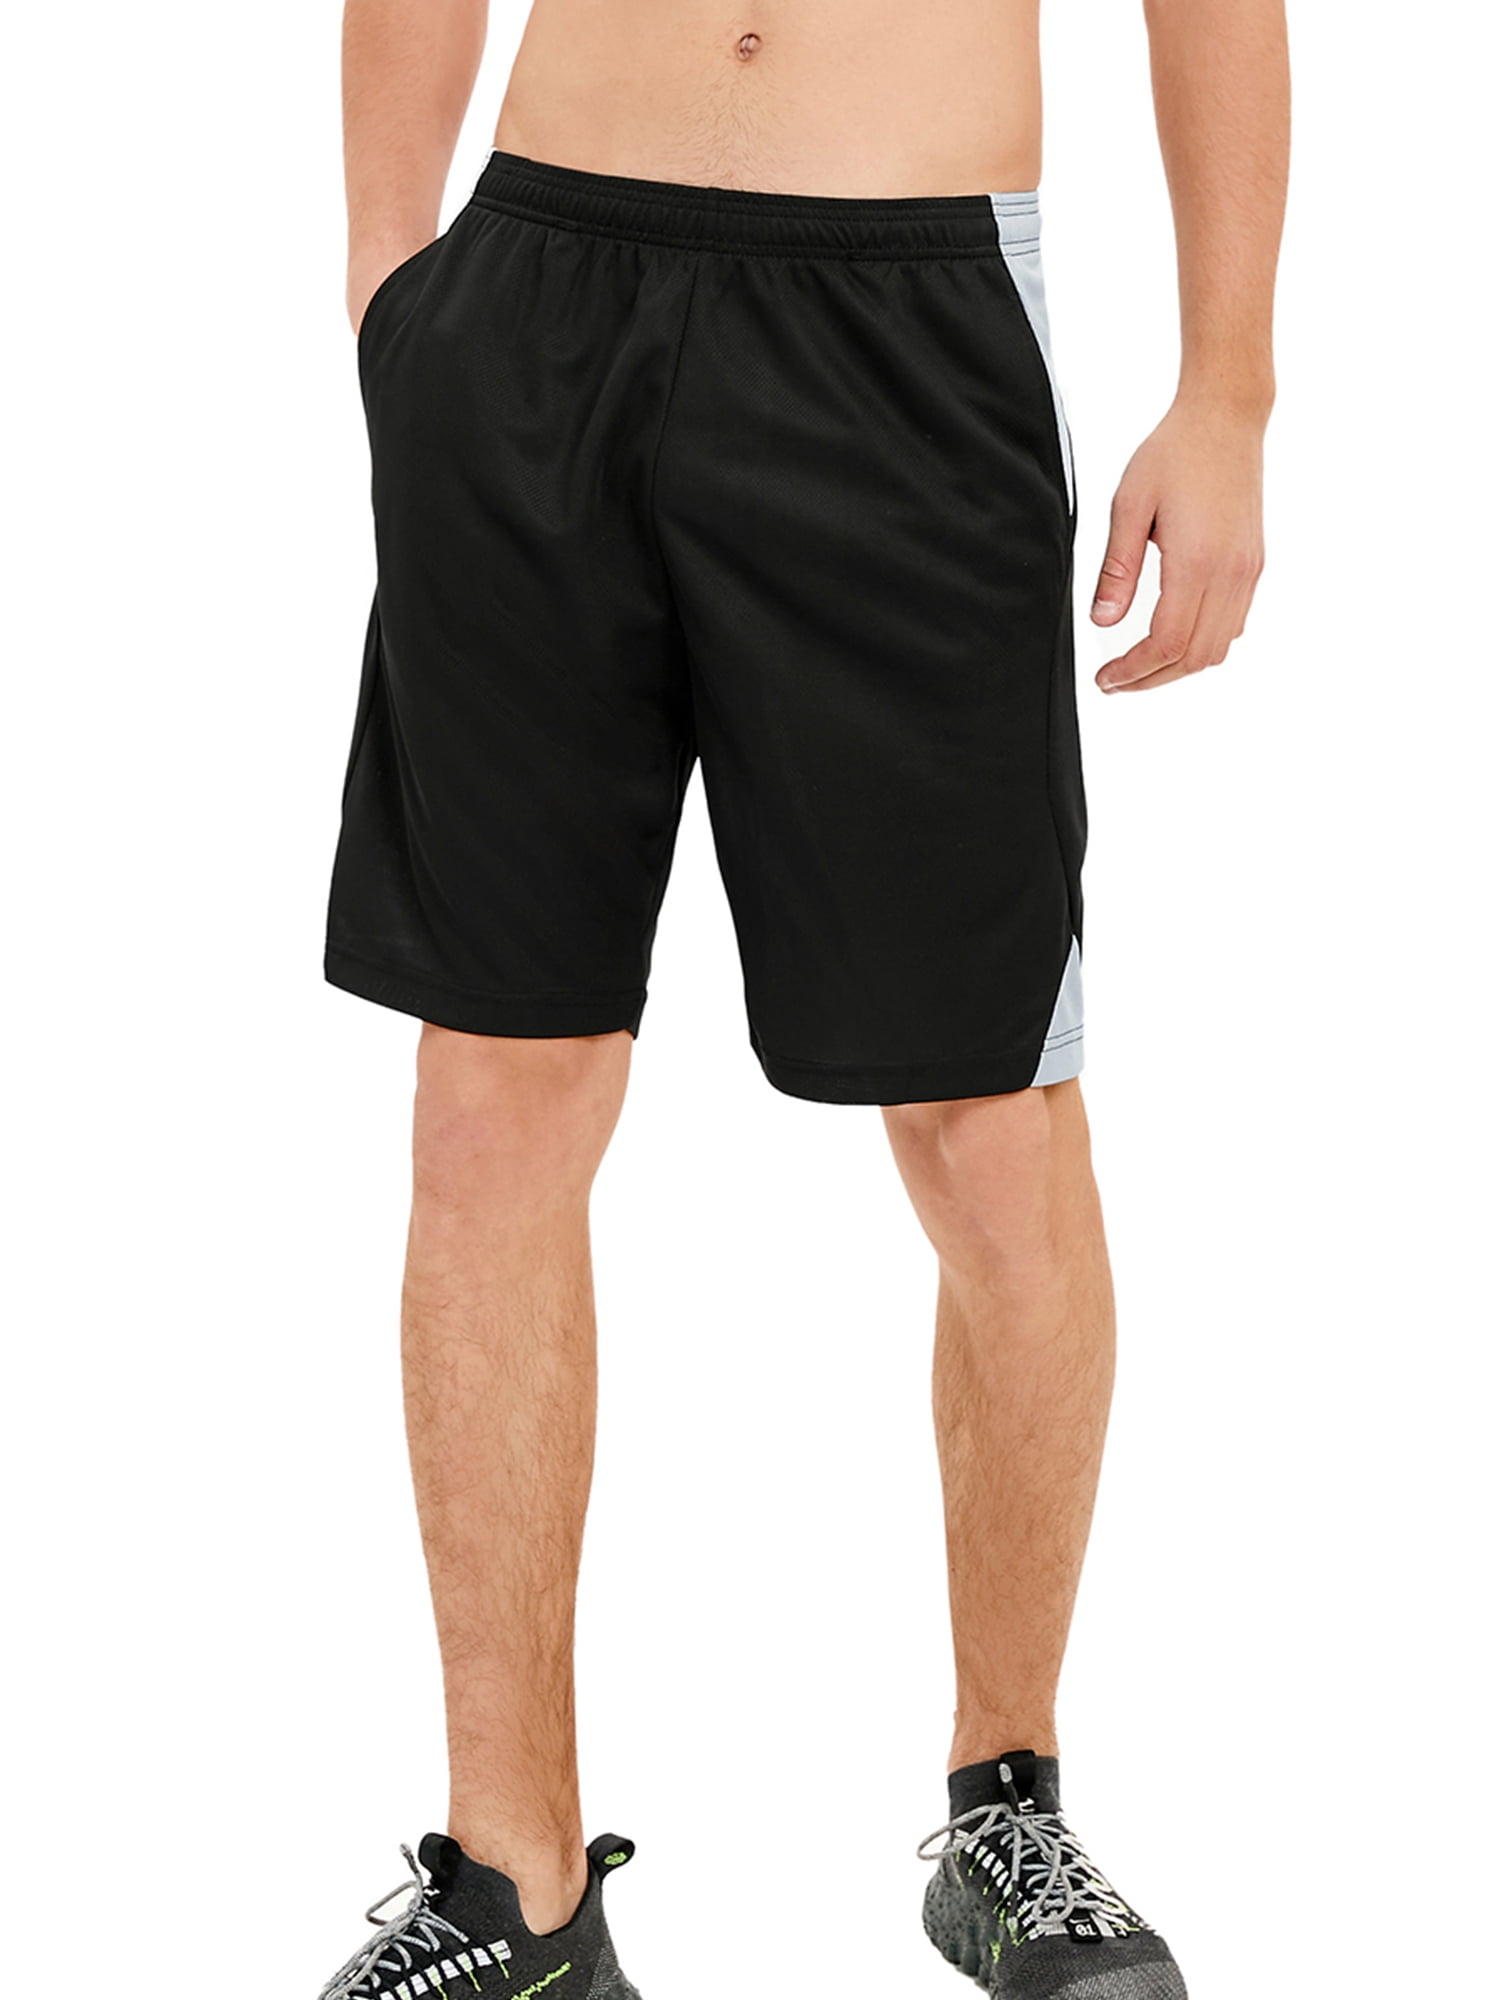 USVSU Mens Short Swim Trunks Bathing Suits Swimwear Drawstring Boardshorts with Pockets 